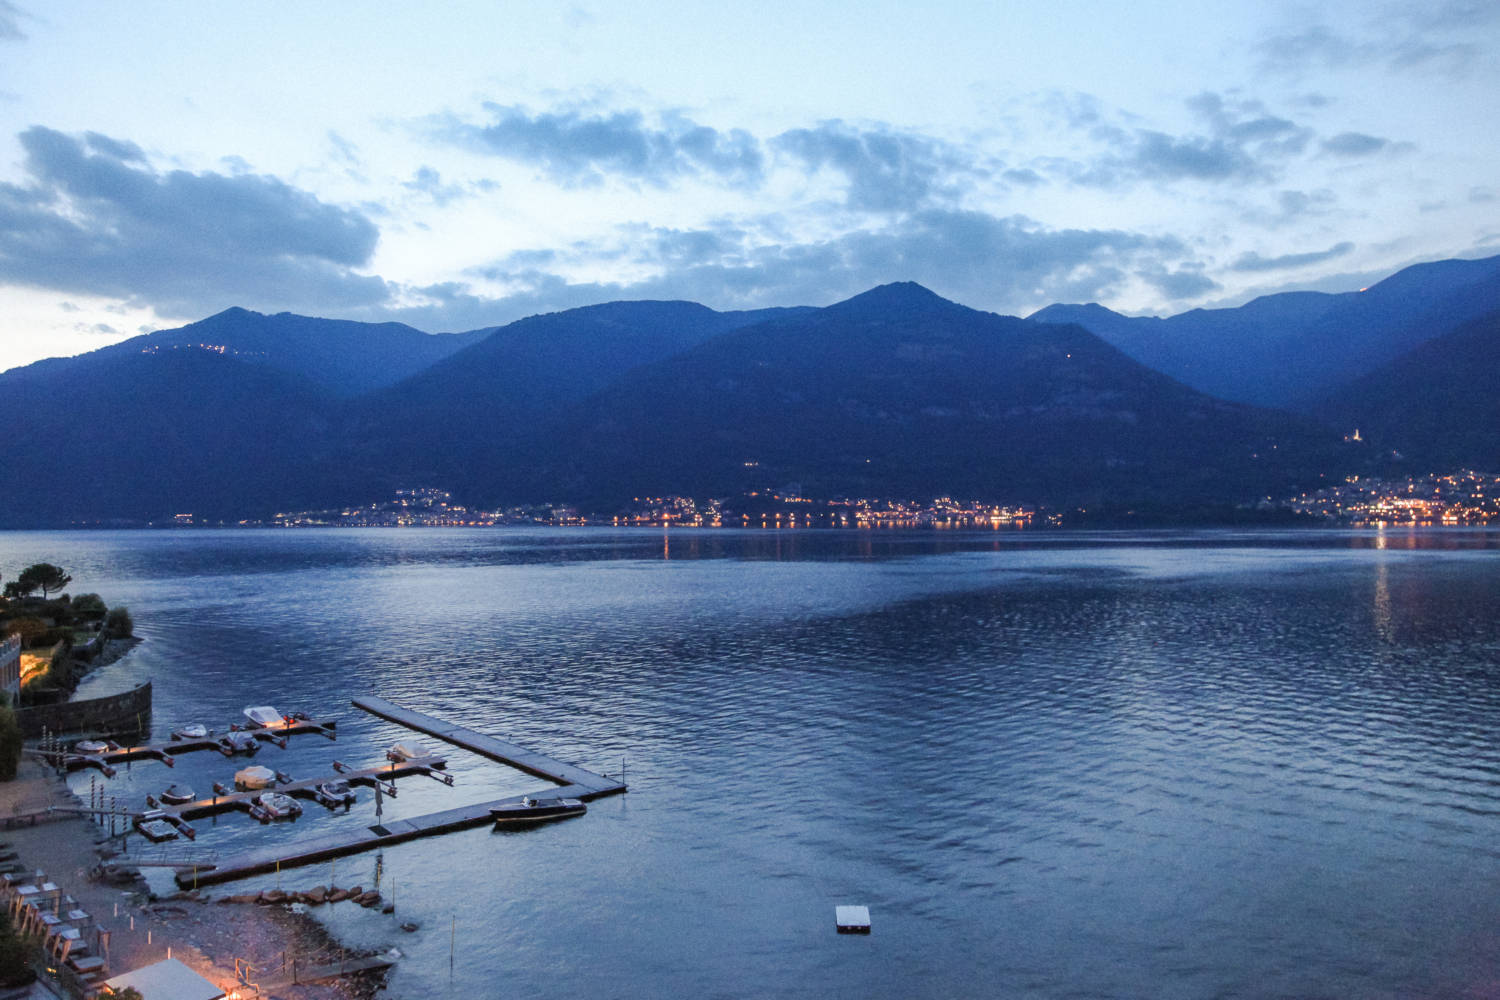 Hotel Filario Lake Como